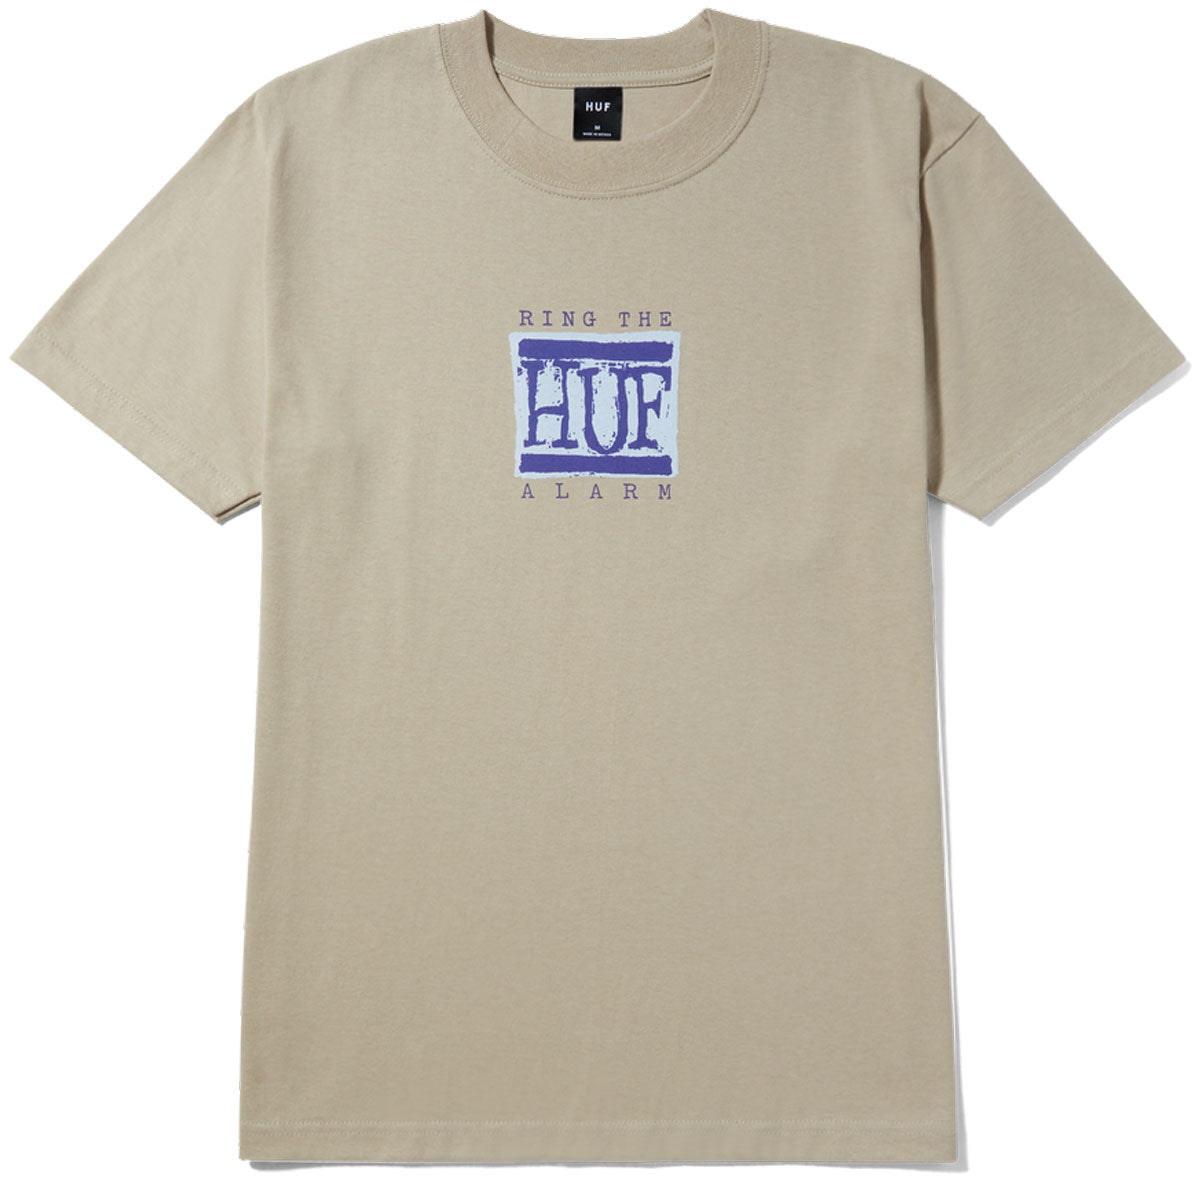 HUF Alarm T-Shirt - Clay image 1